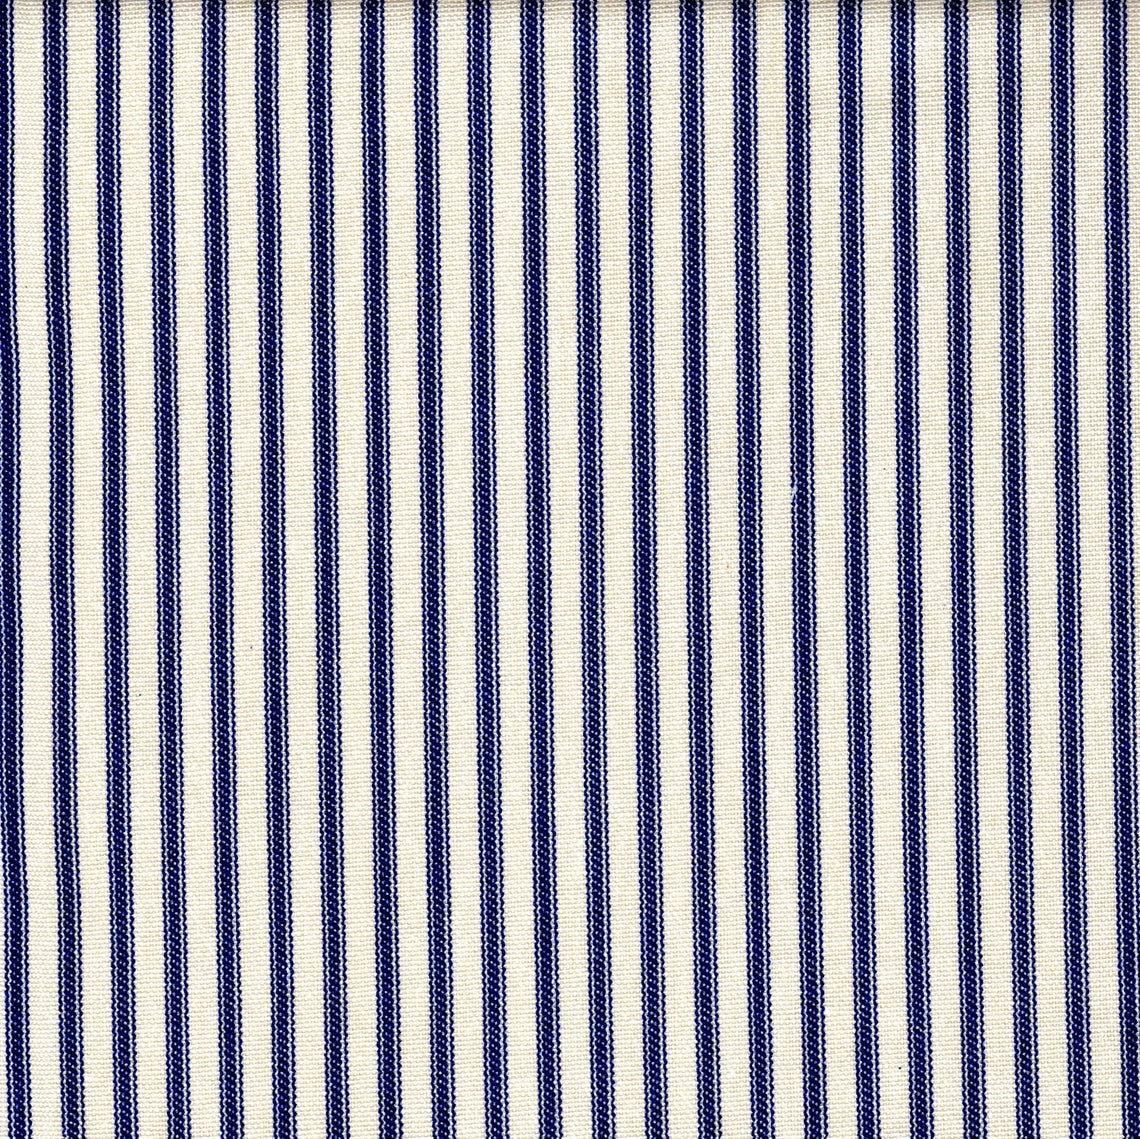 tailored bedskirt in farmhouse dark blue ticking stripe on cream